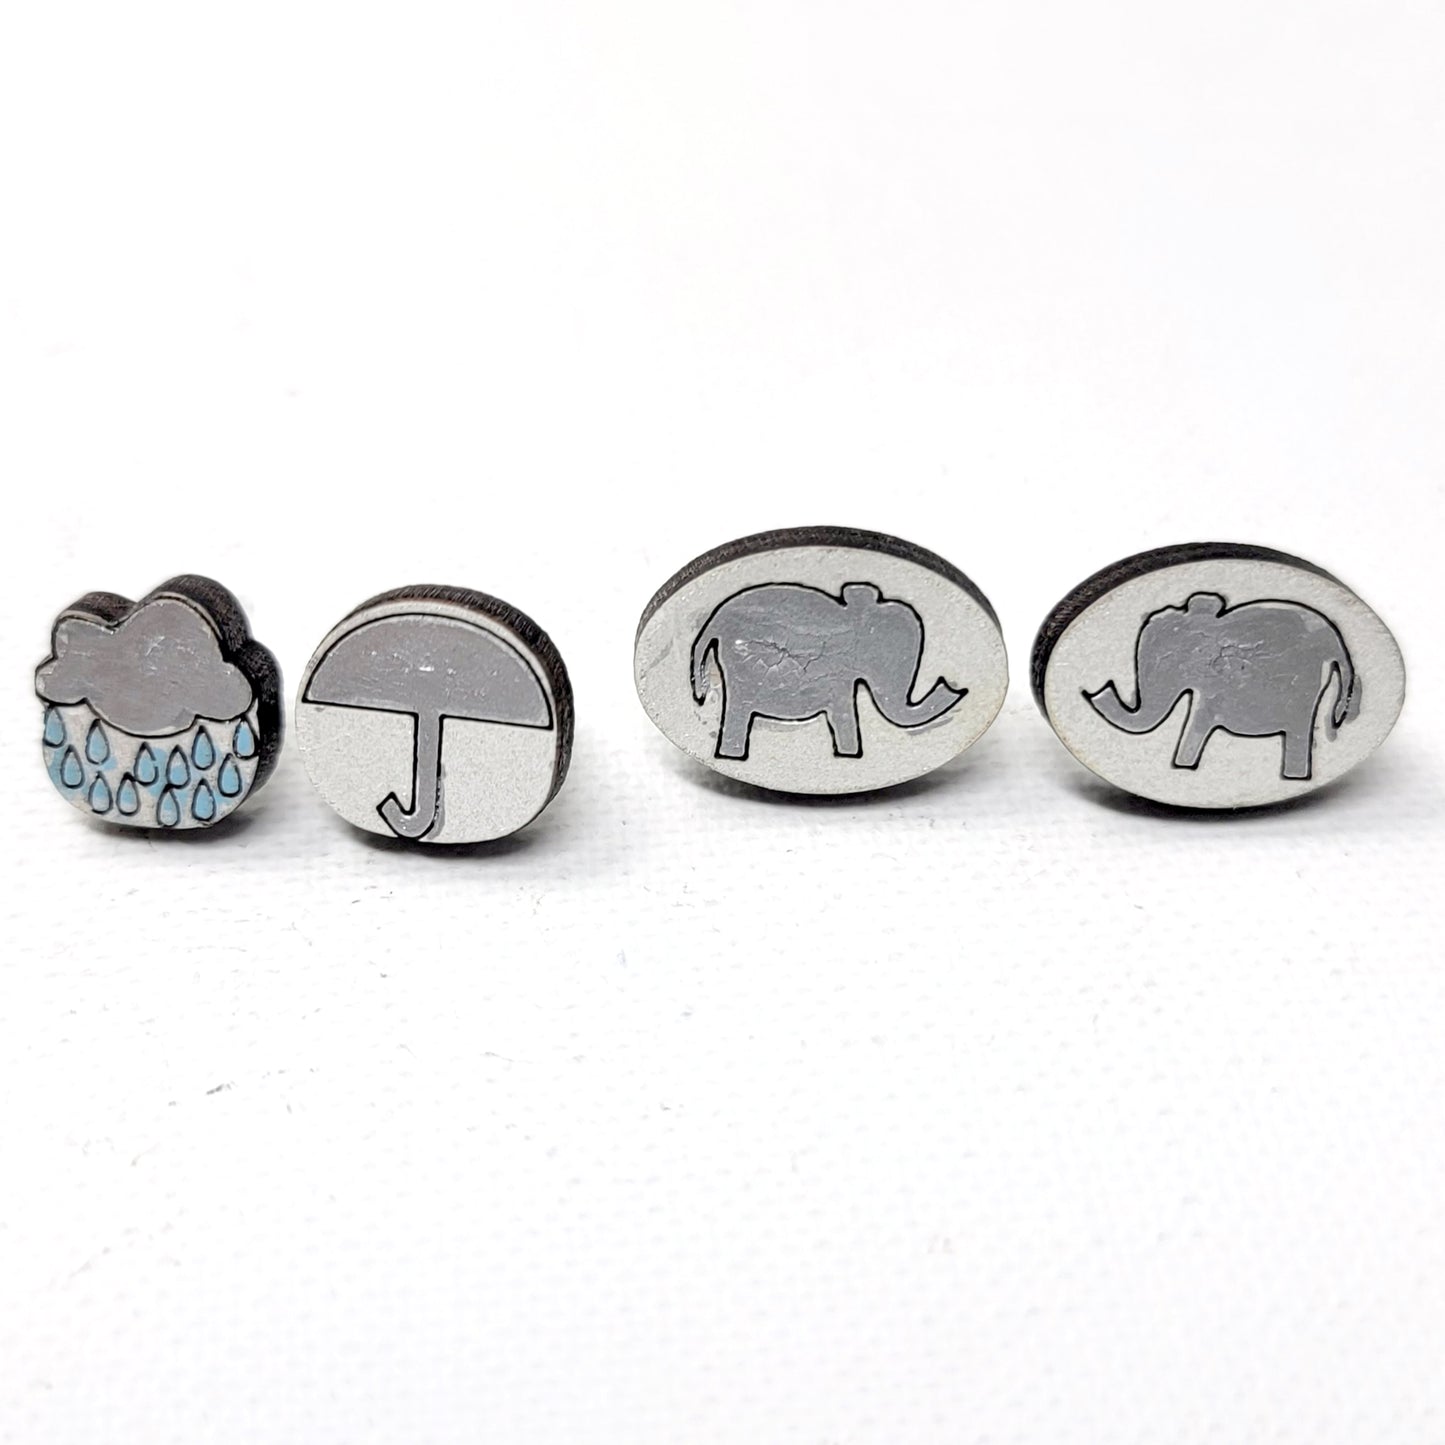 Rainy Day and Elephant Earrings